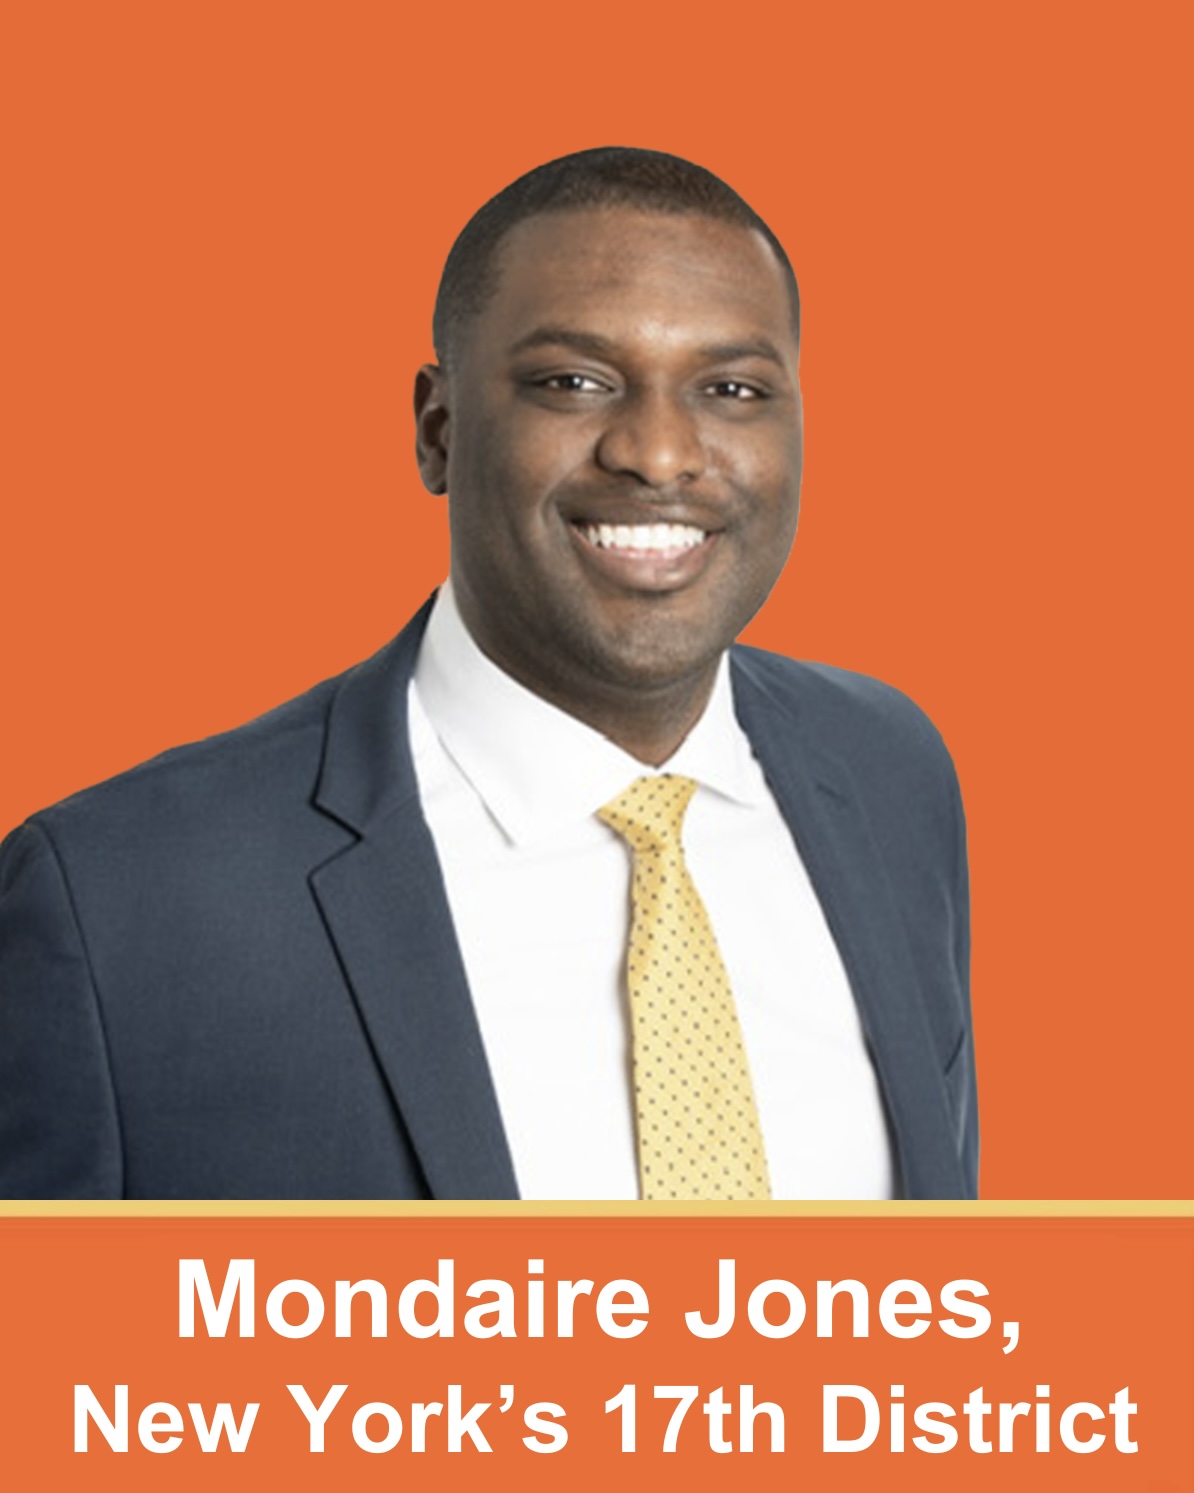 Mondaire Jones, New York's 17th District